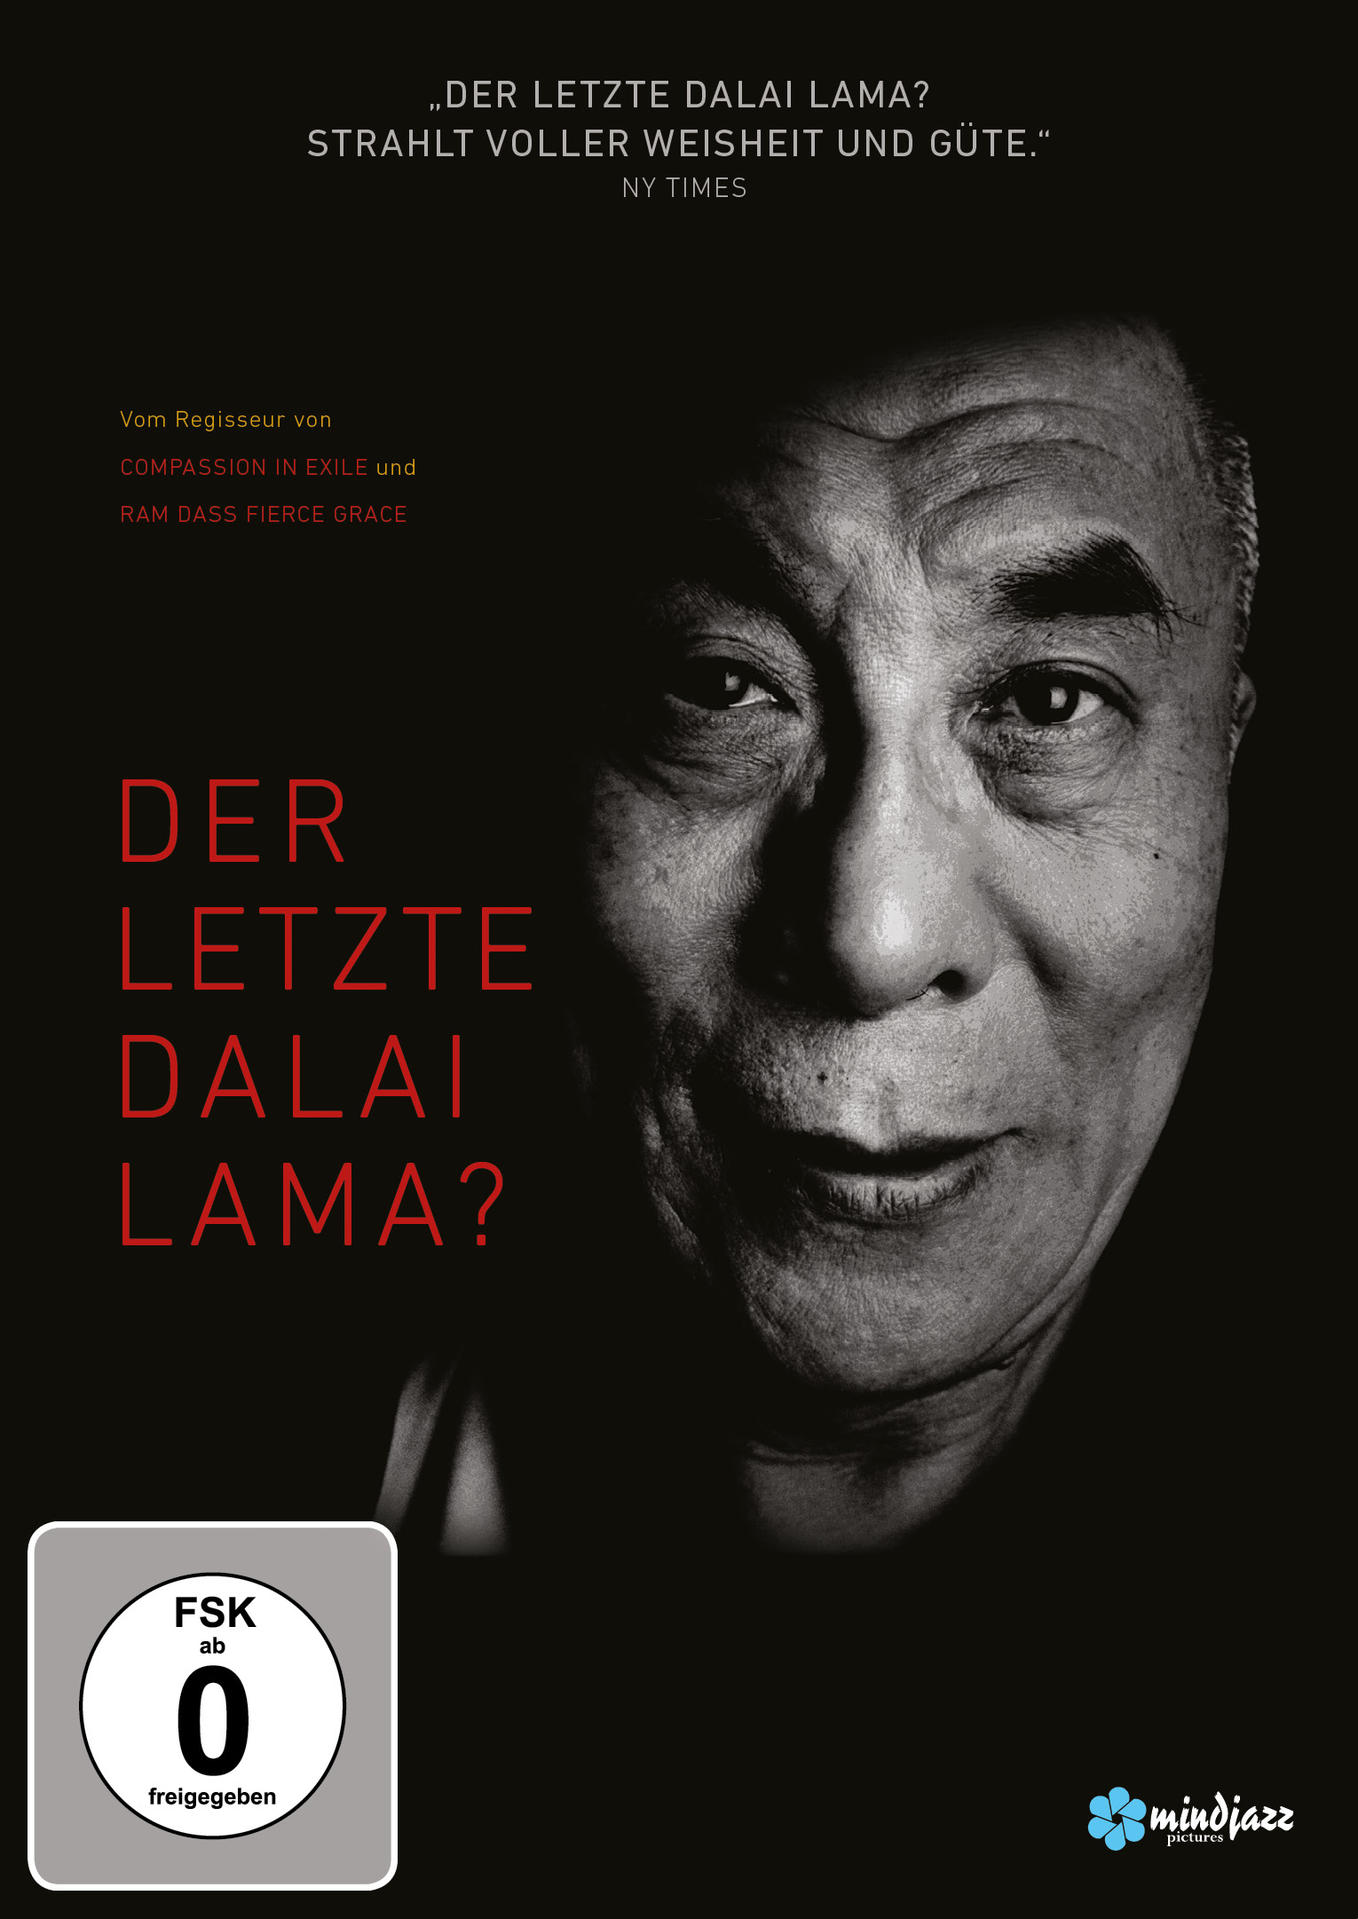 Der Lama? - letzte Dalai (DVD)